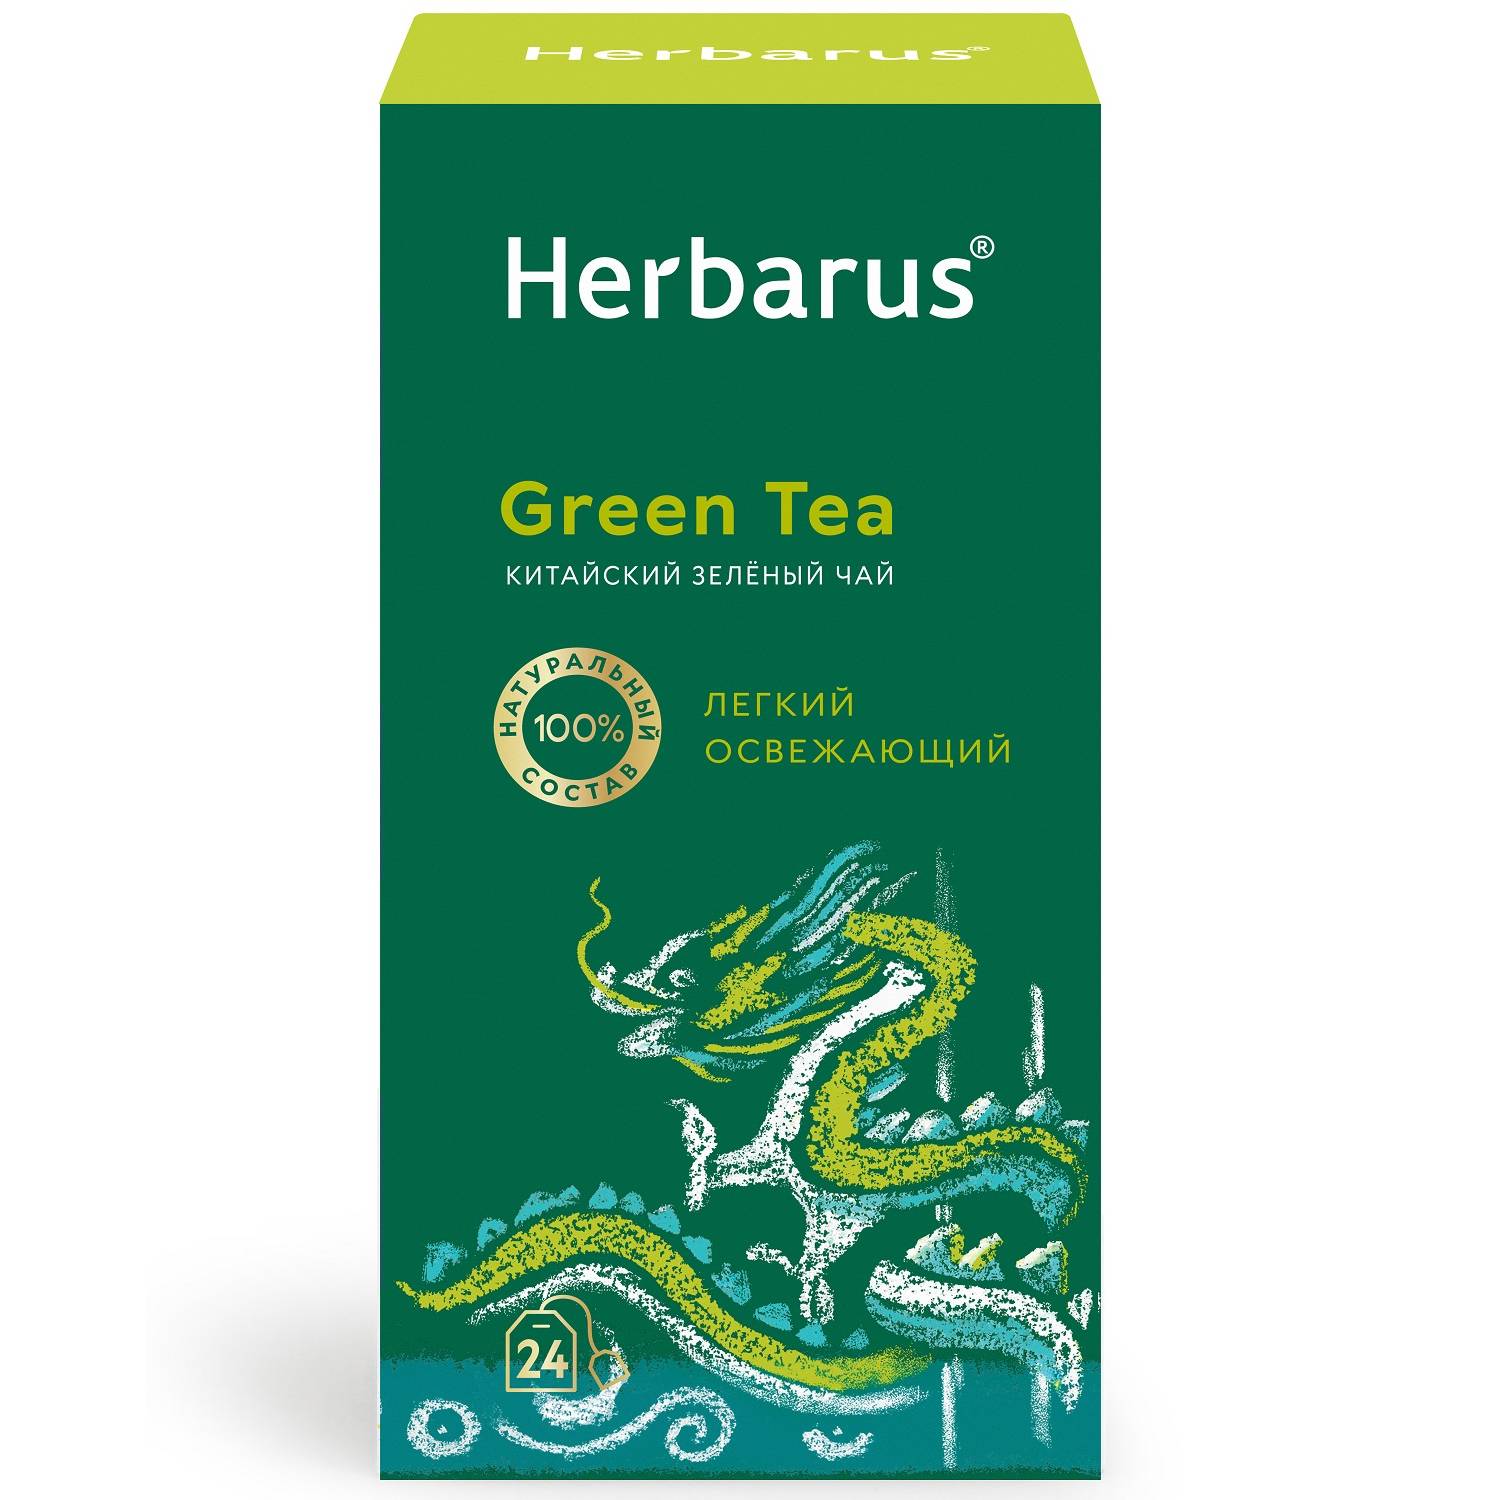 Herbarus Чай зеленый китайский Green Tea, 24 пакетика х 2 г (Herbarus, Классический чай) herbarus чай с добавками ассорти чай черный 24 х 2 г herbarus чай с добавками